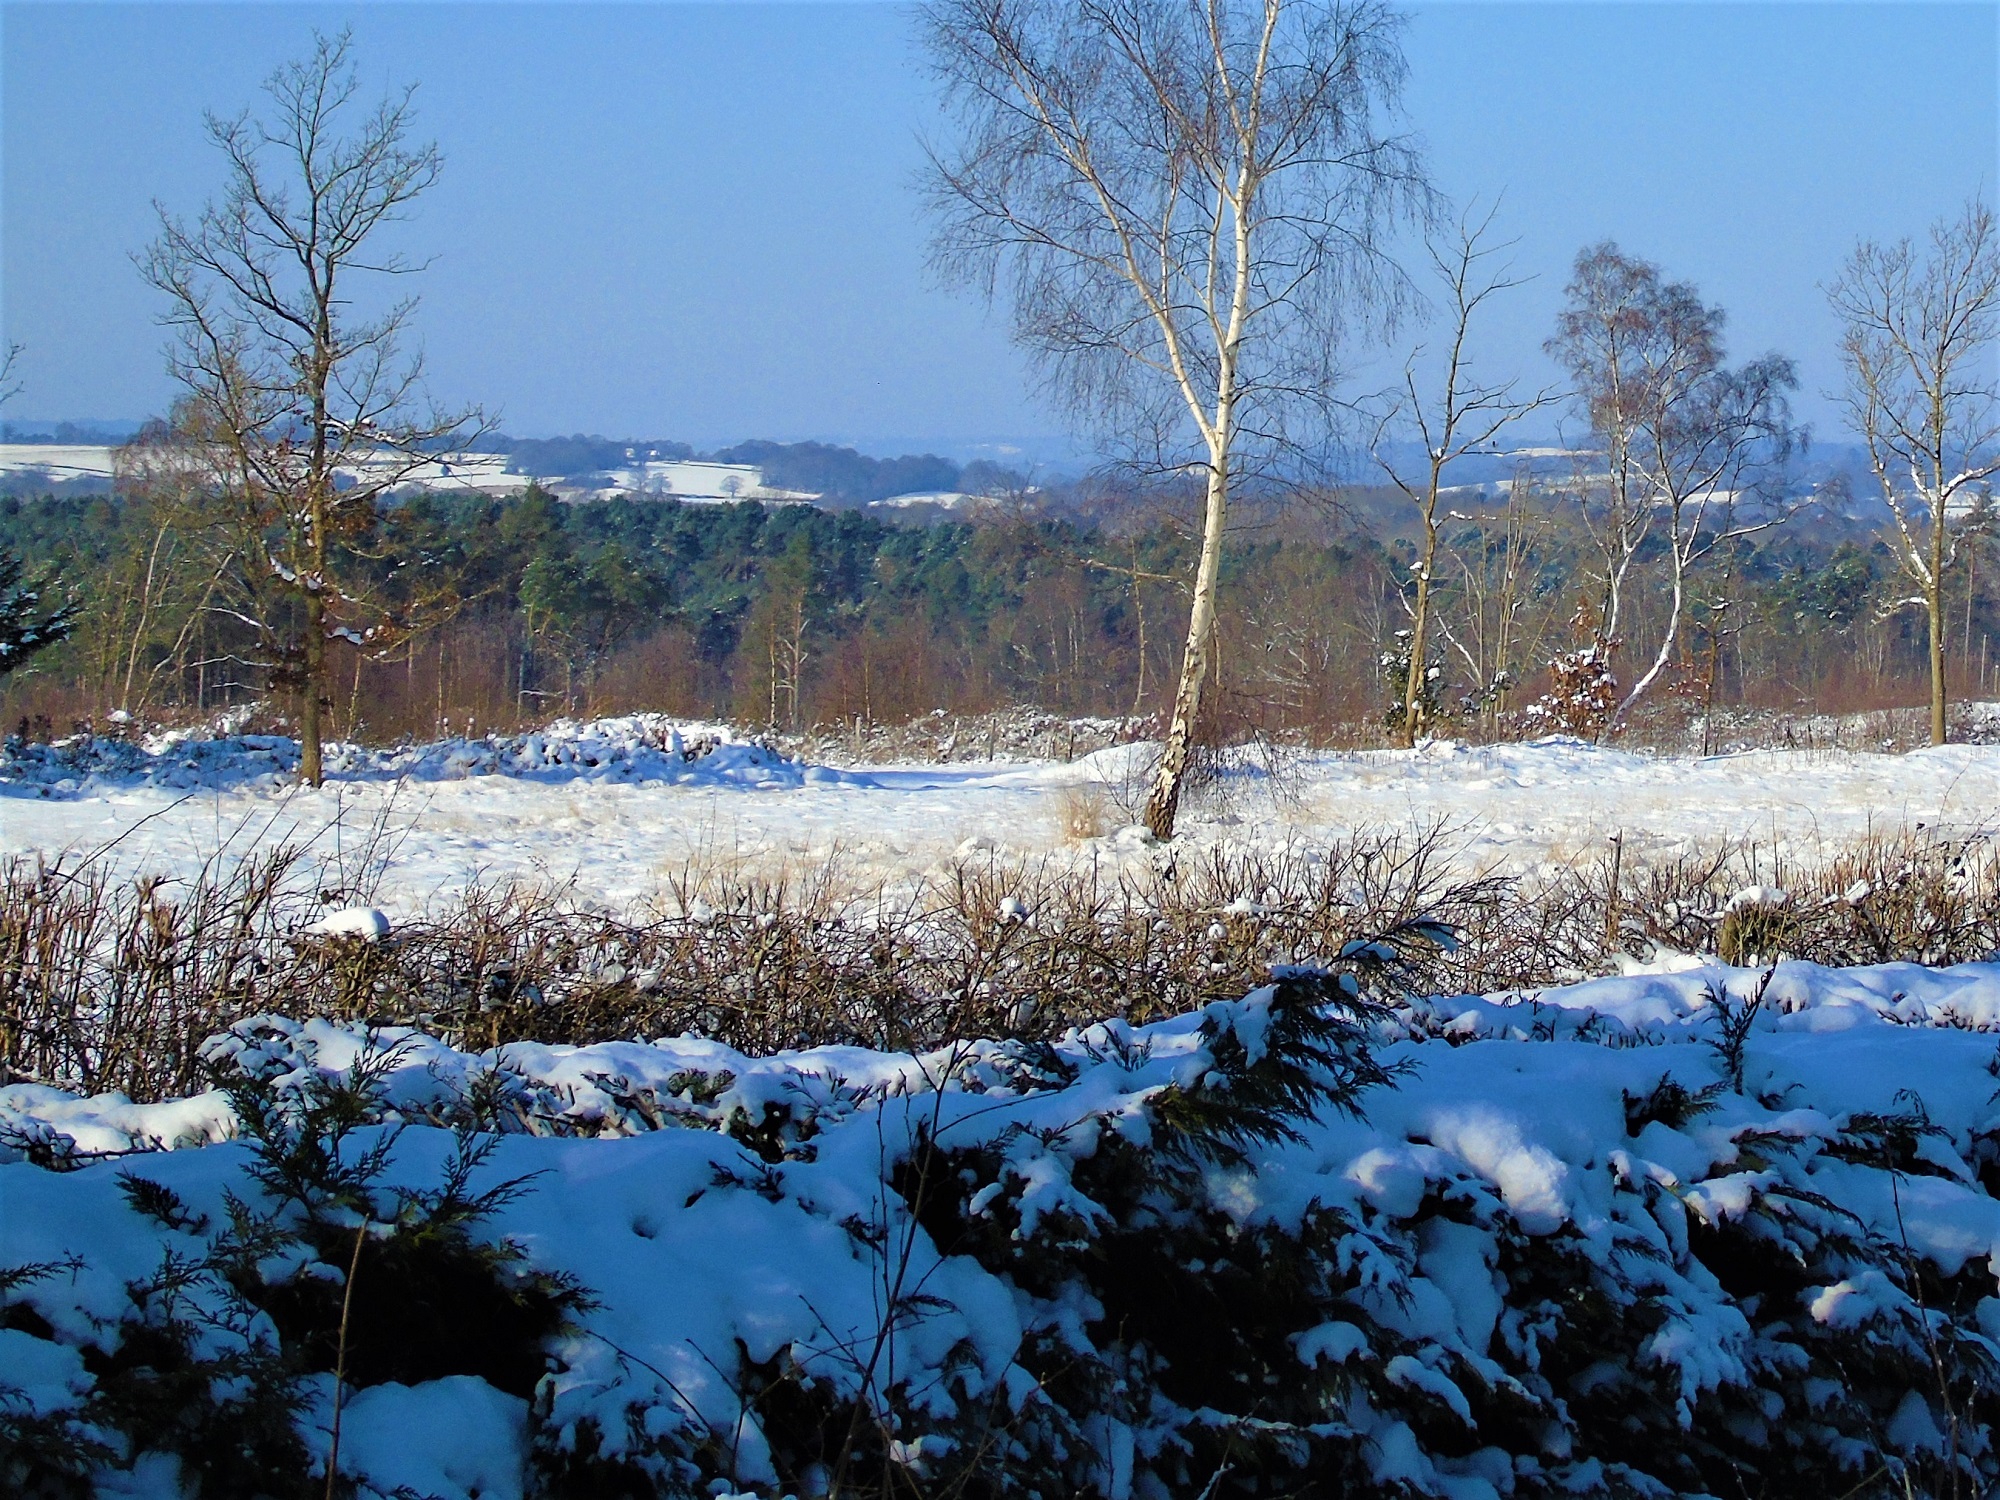 View across Bond’s Heath, snowy morning